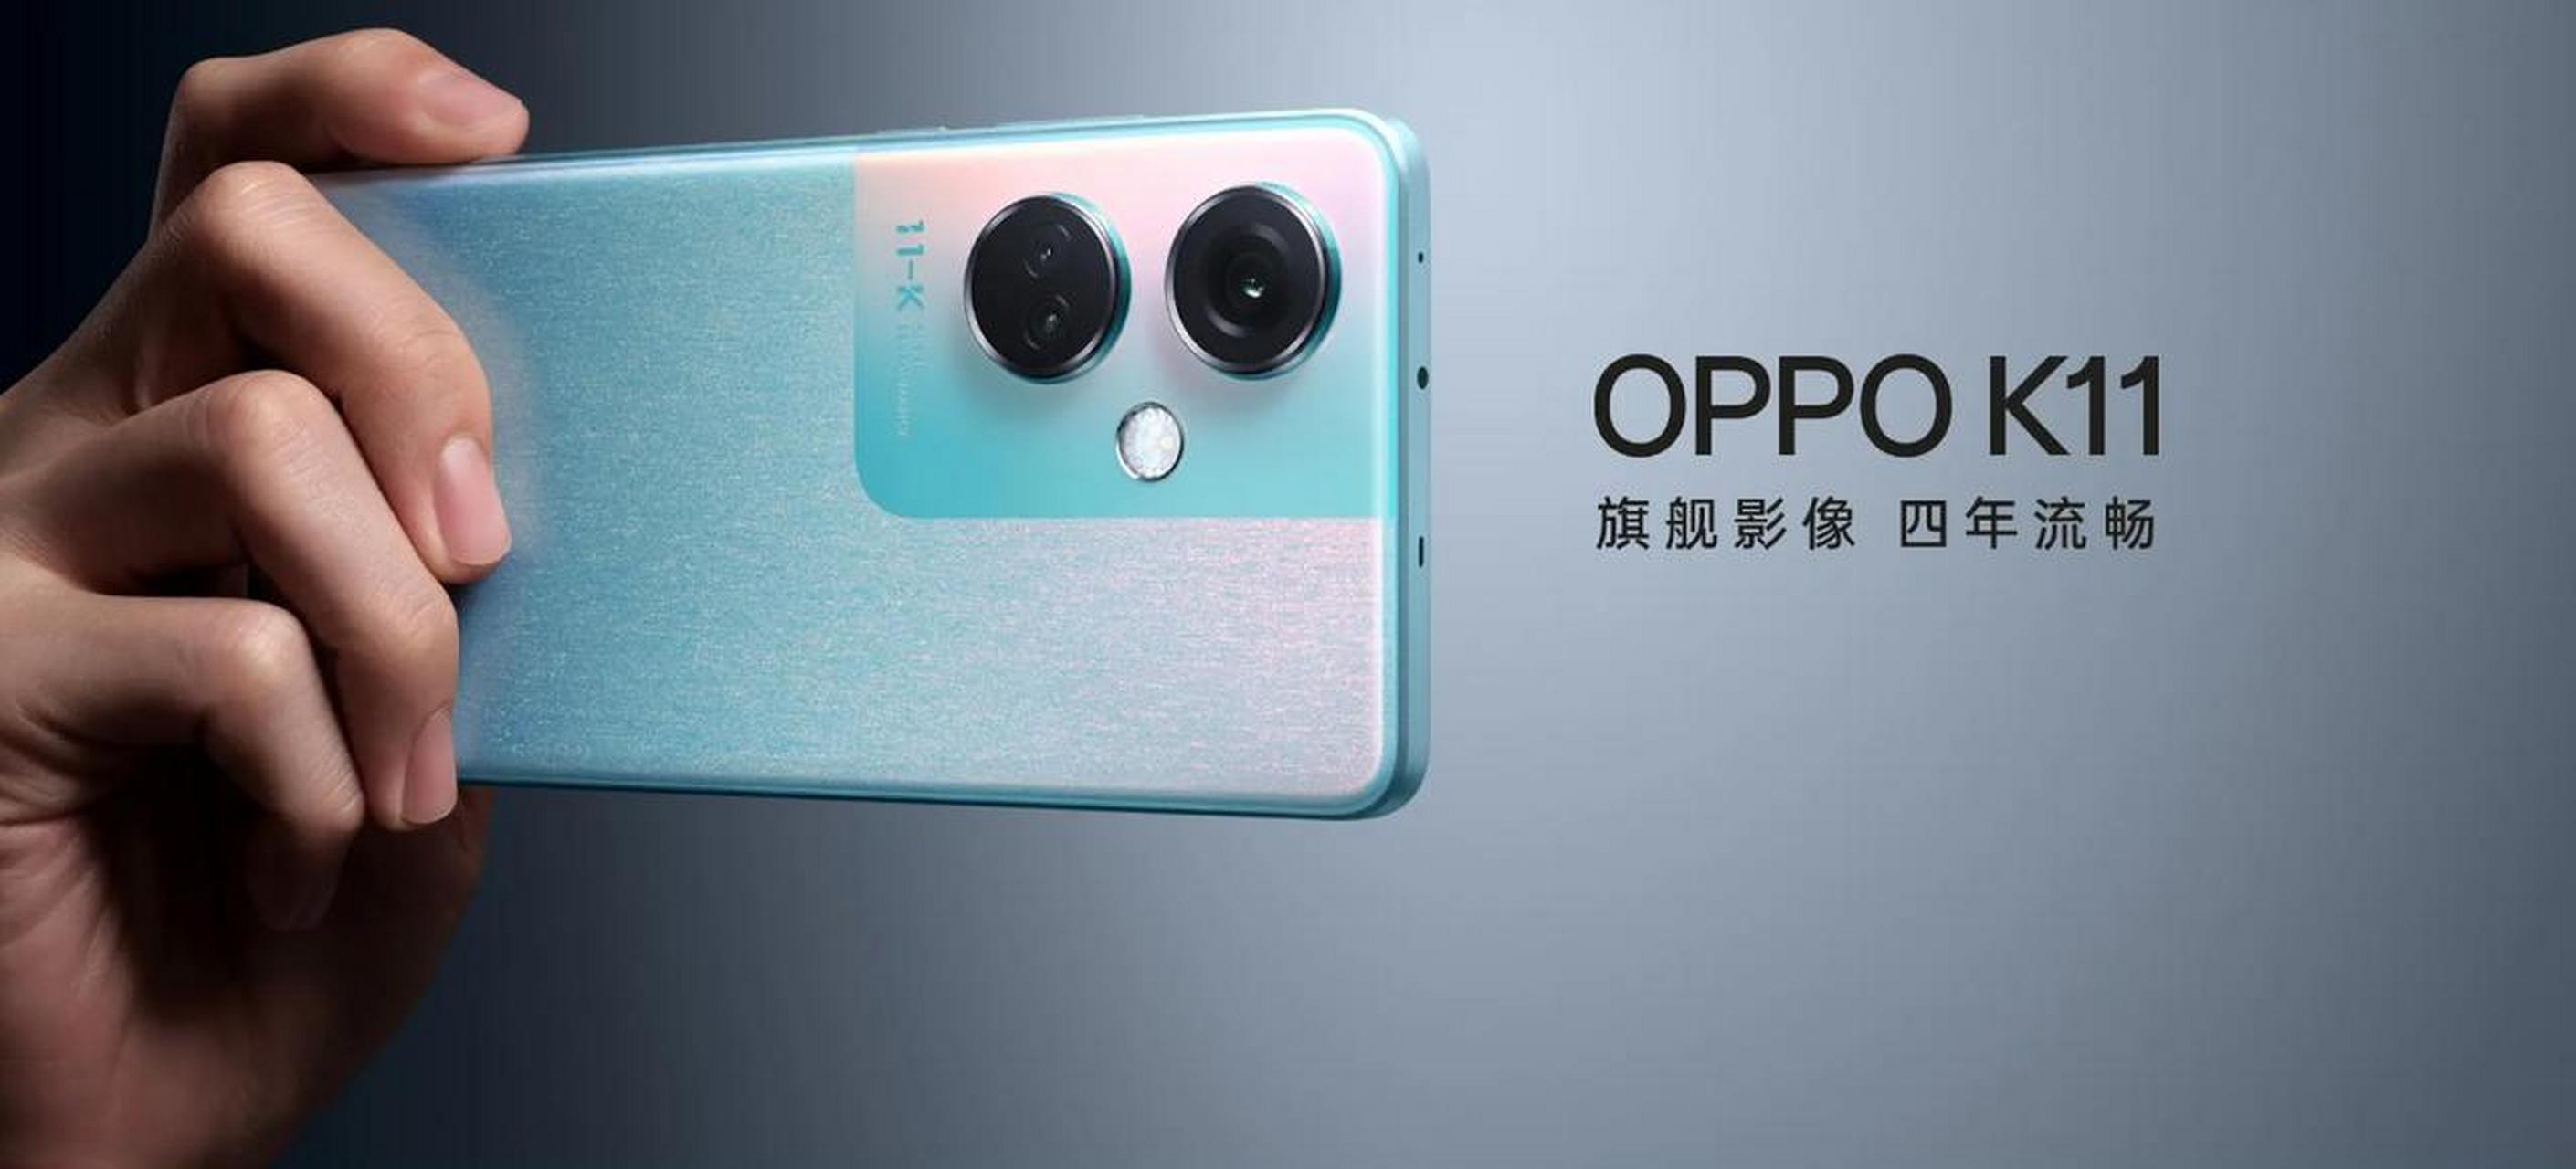 oppo k11开启预售,8月1号正式发售